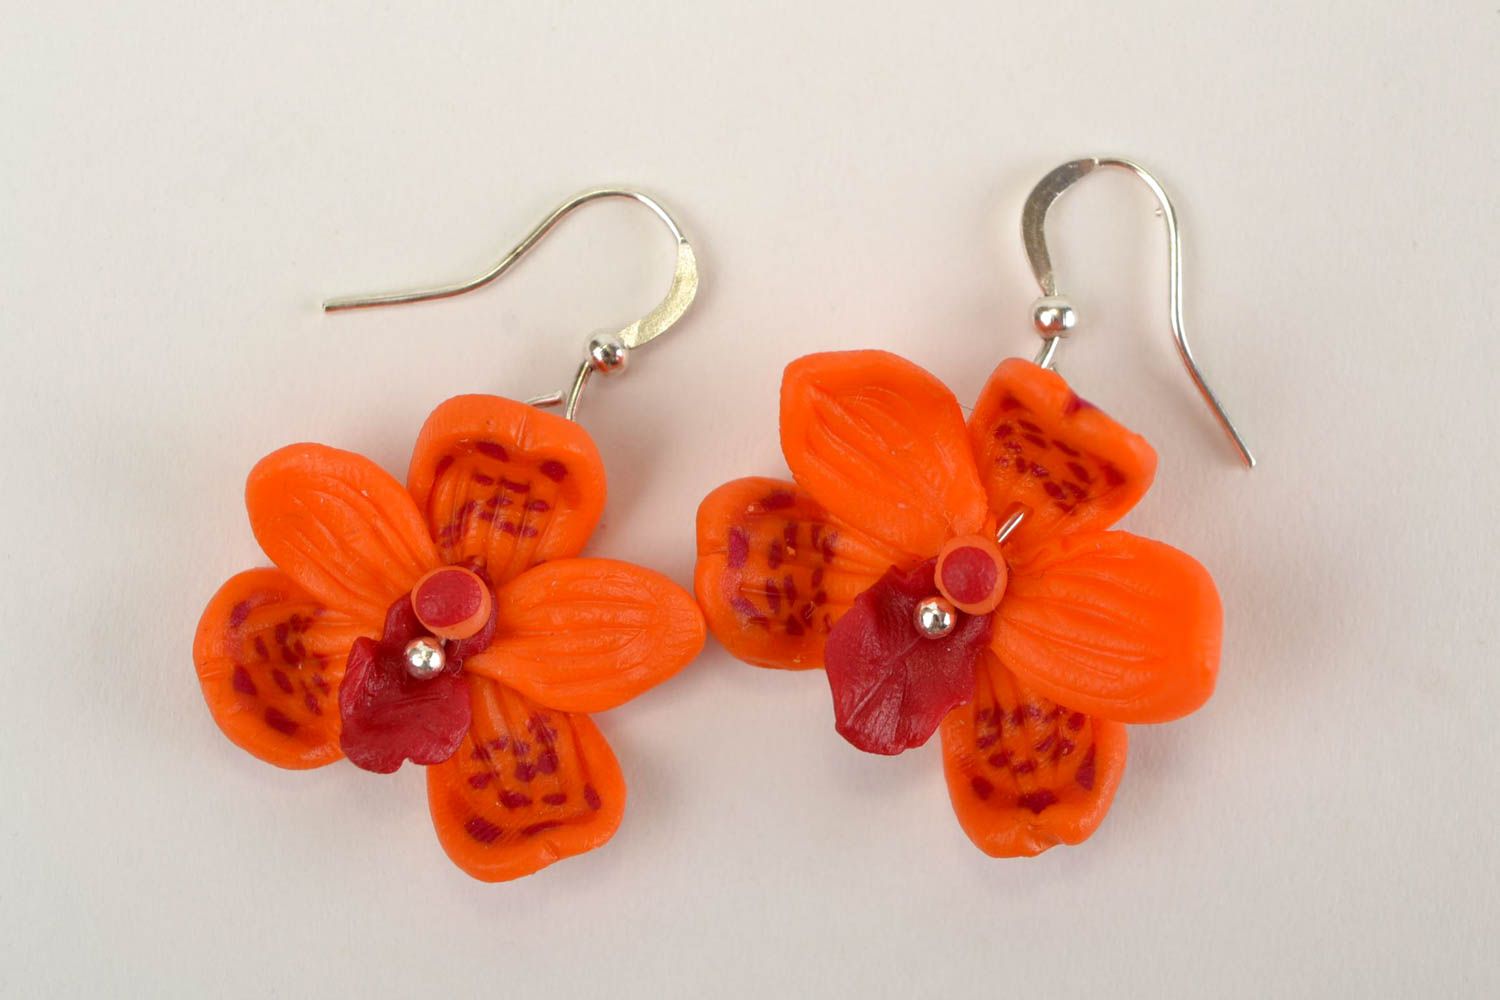 Handmade earrings designer accessory unusual jewelry clay earrings gift ideas photo 3